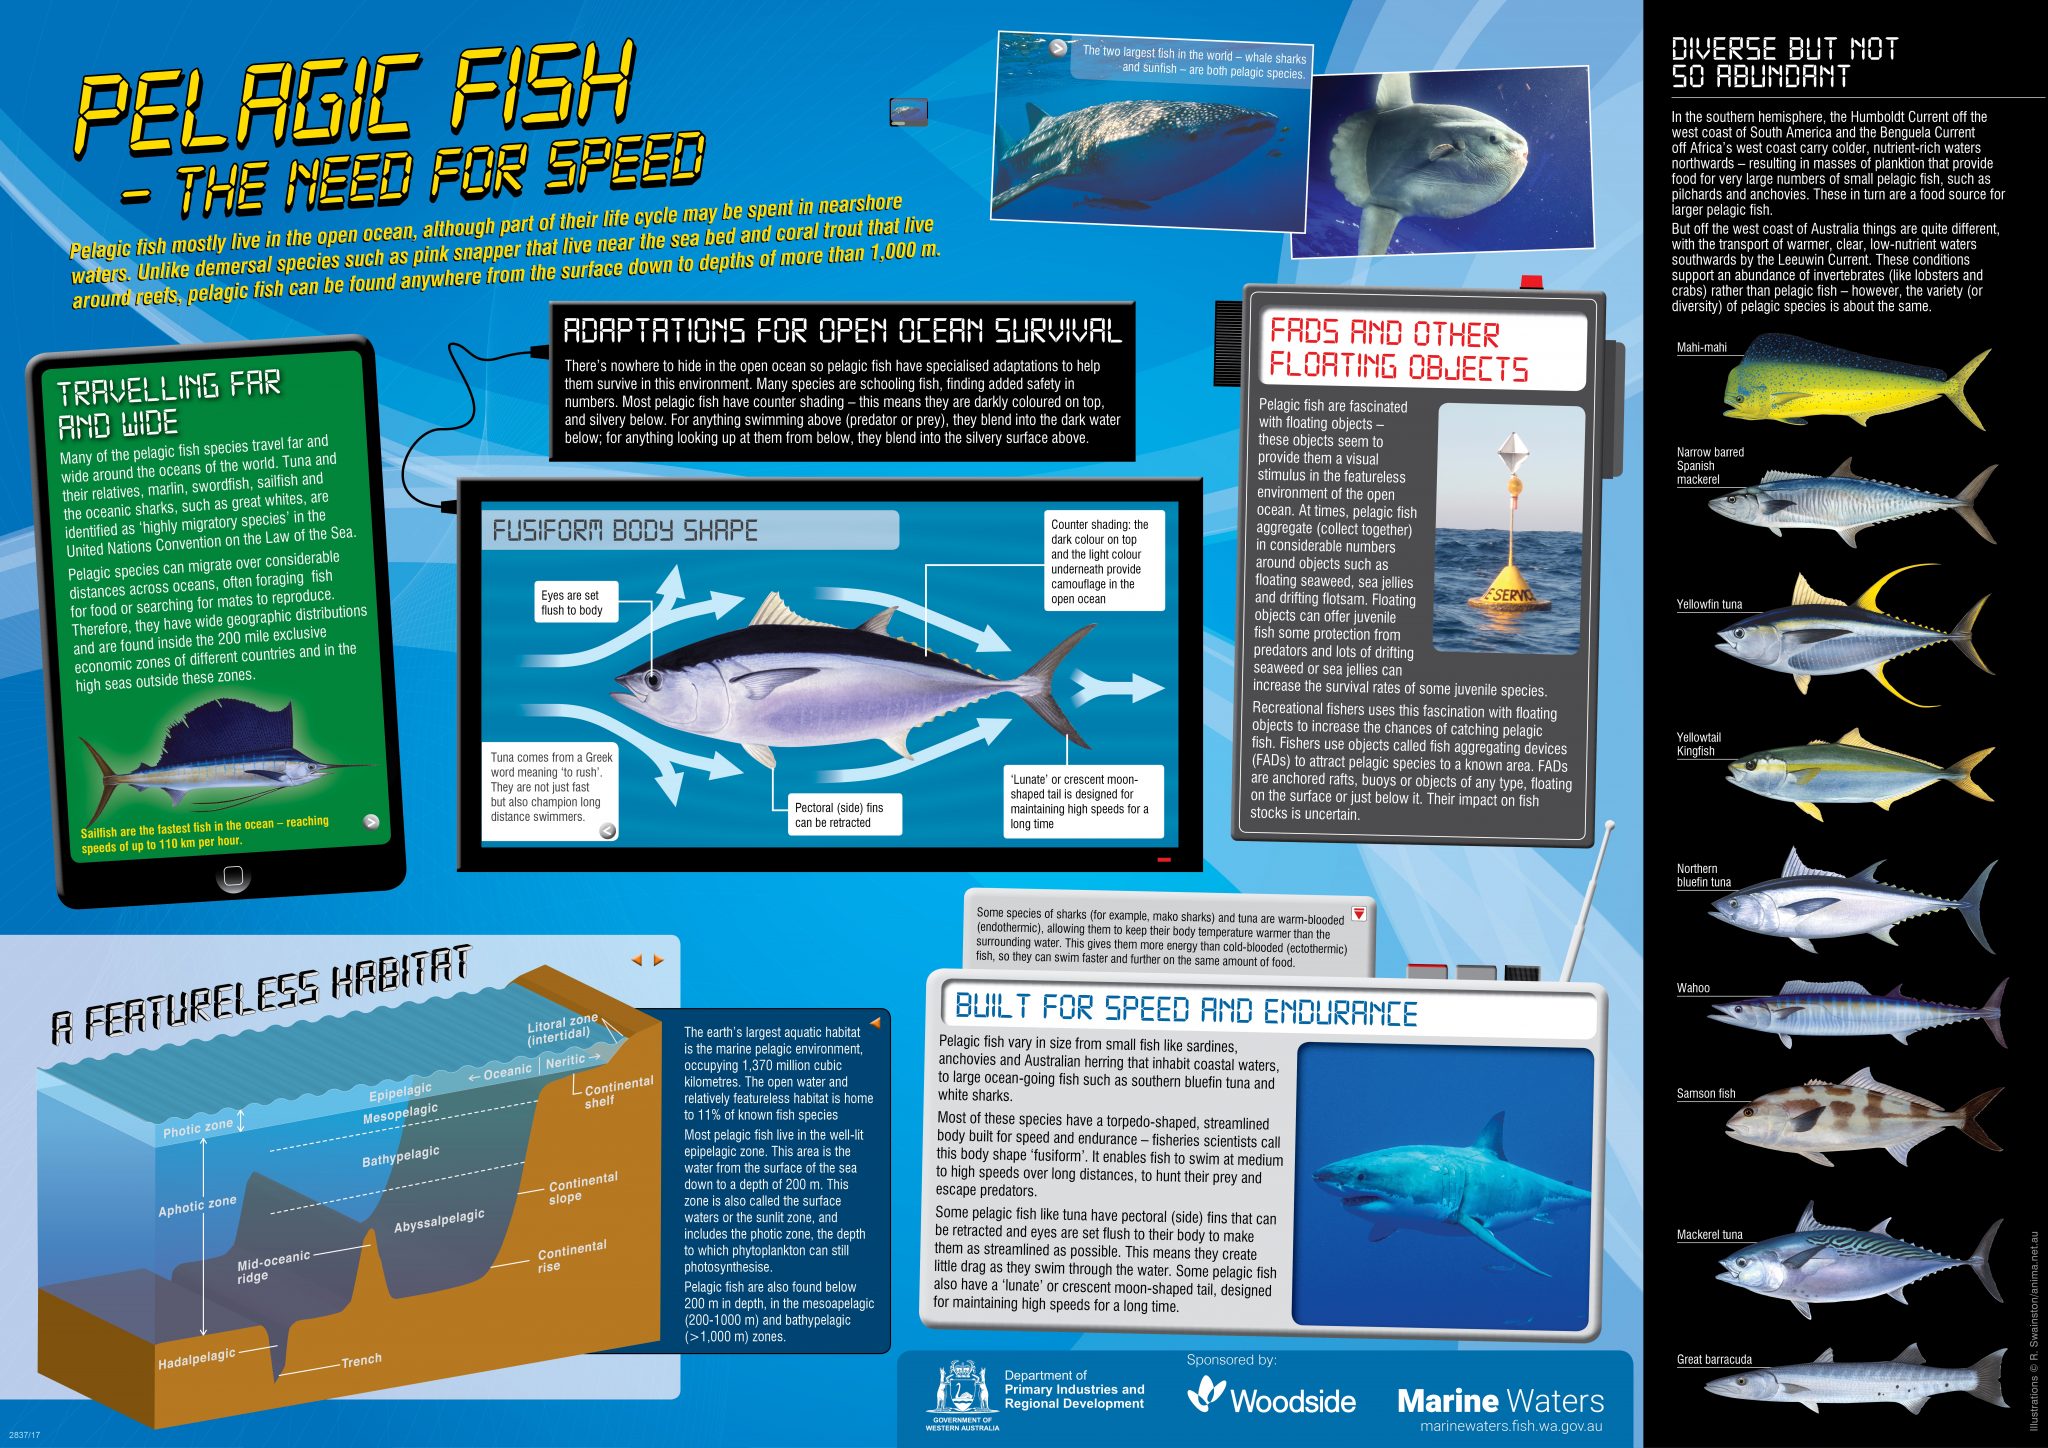 https://marinewaters.fish.wa.gov.au/mwwp/wp-content/uploads/2019/04/2837-17-Pelagic-fish-poster-MAY19.jpg